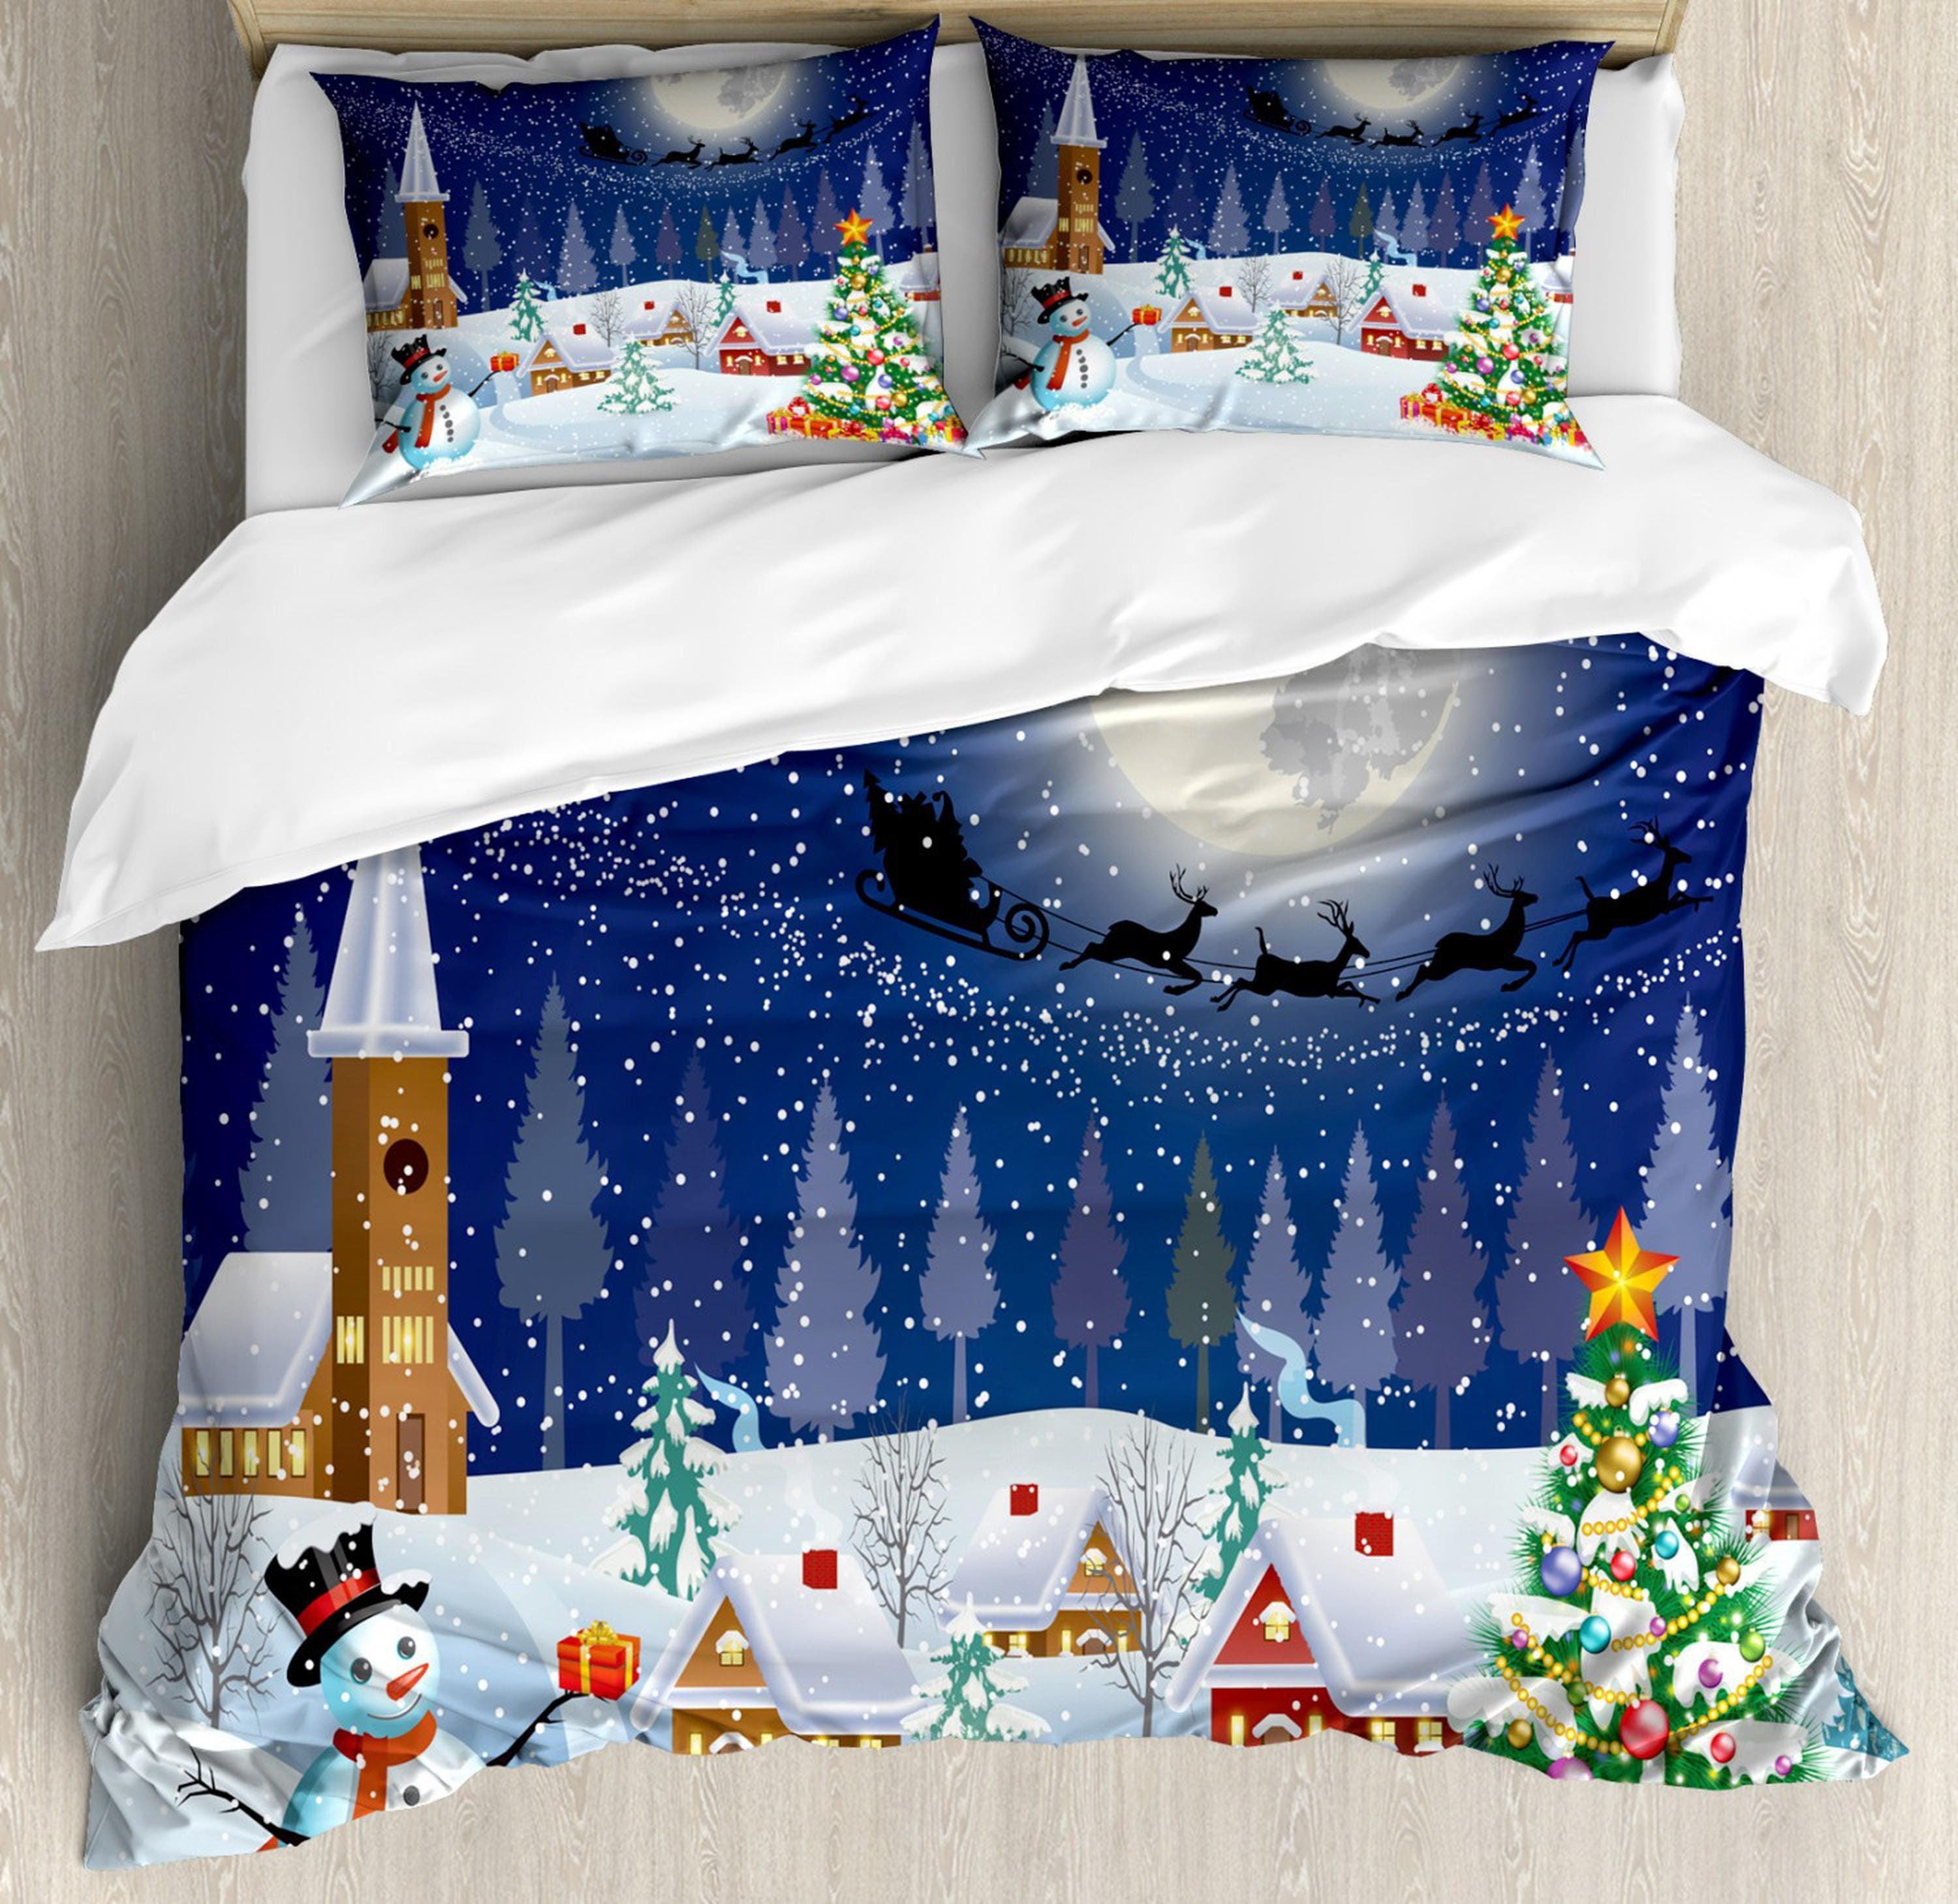 daintyduvet Snowman flying Santa Claus reindeer, white Christmas bedding & pillowcase holiday gift duvet cover, toddler bedding baby Christmas farmhouse